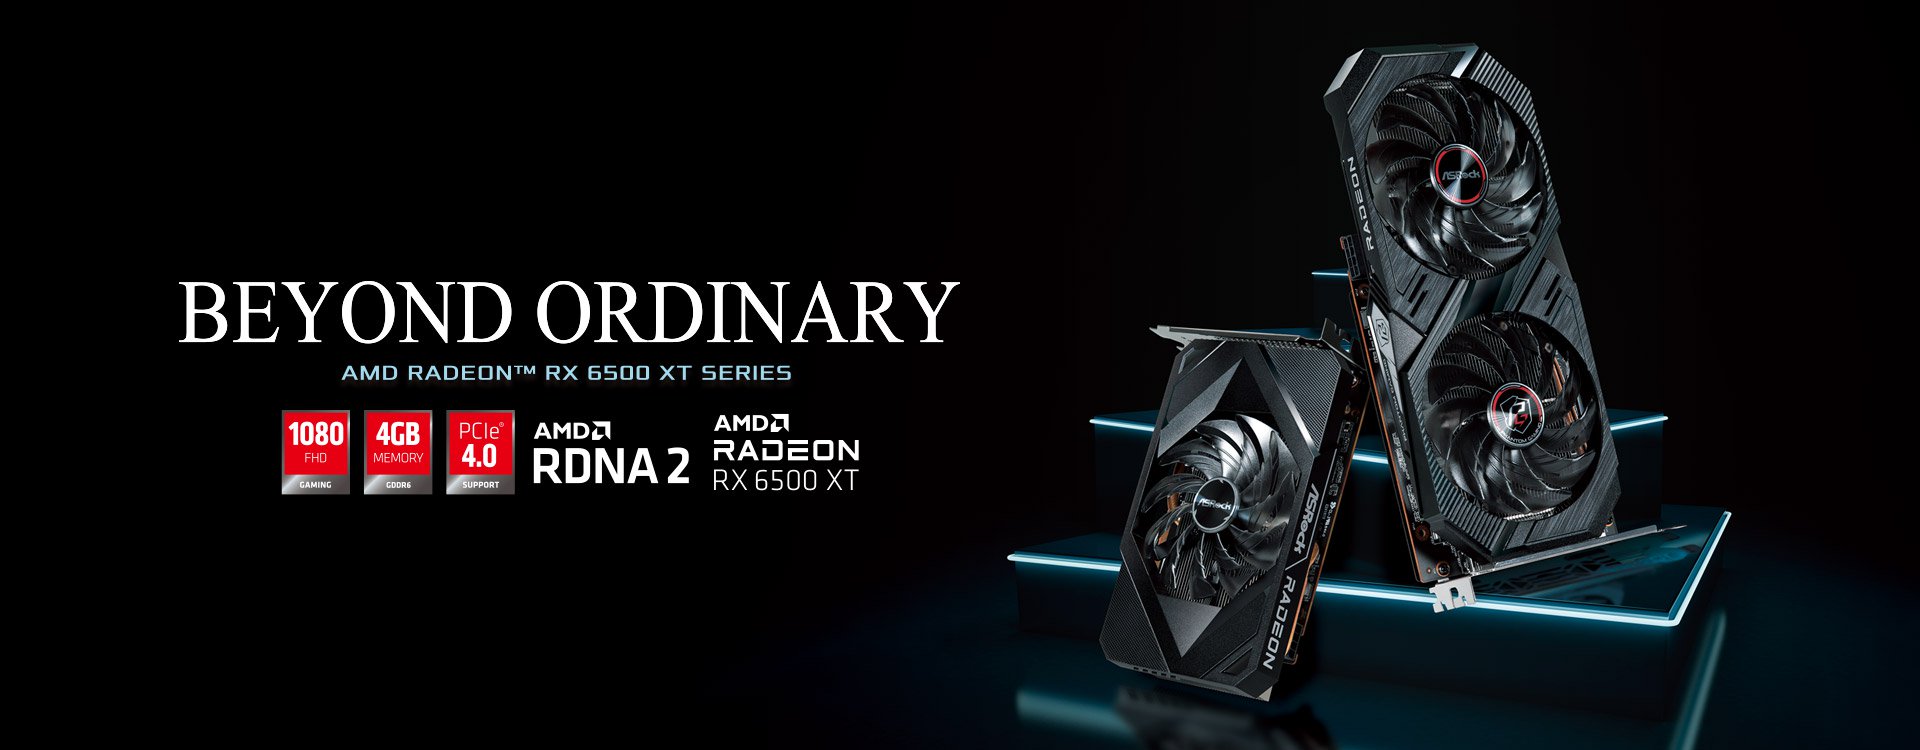 AMD Radeon RX 6500 XT Launch